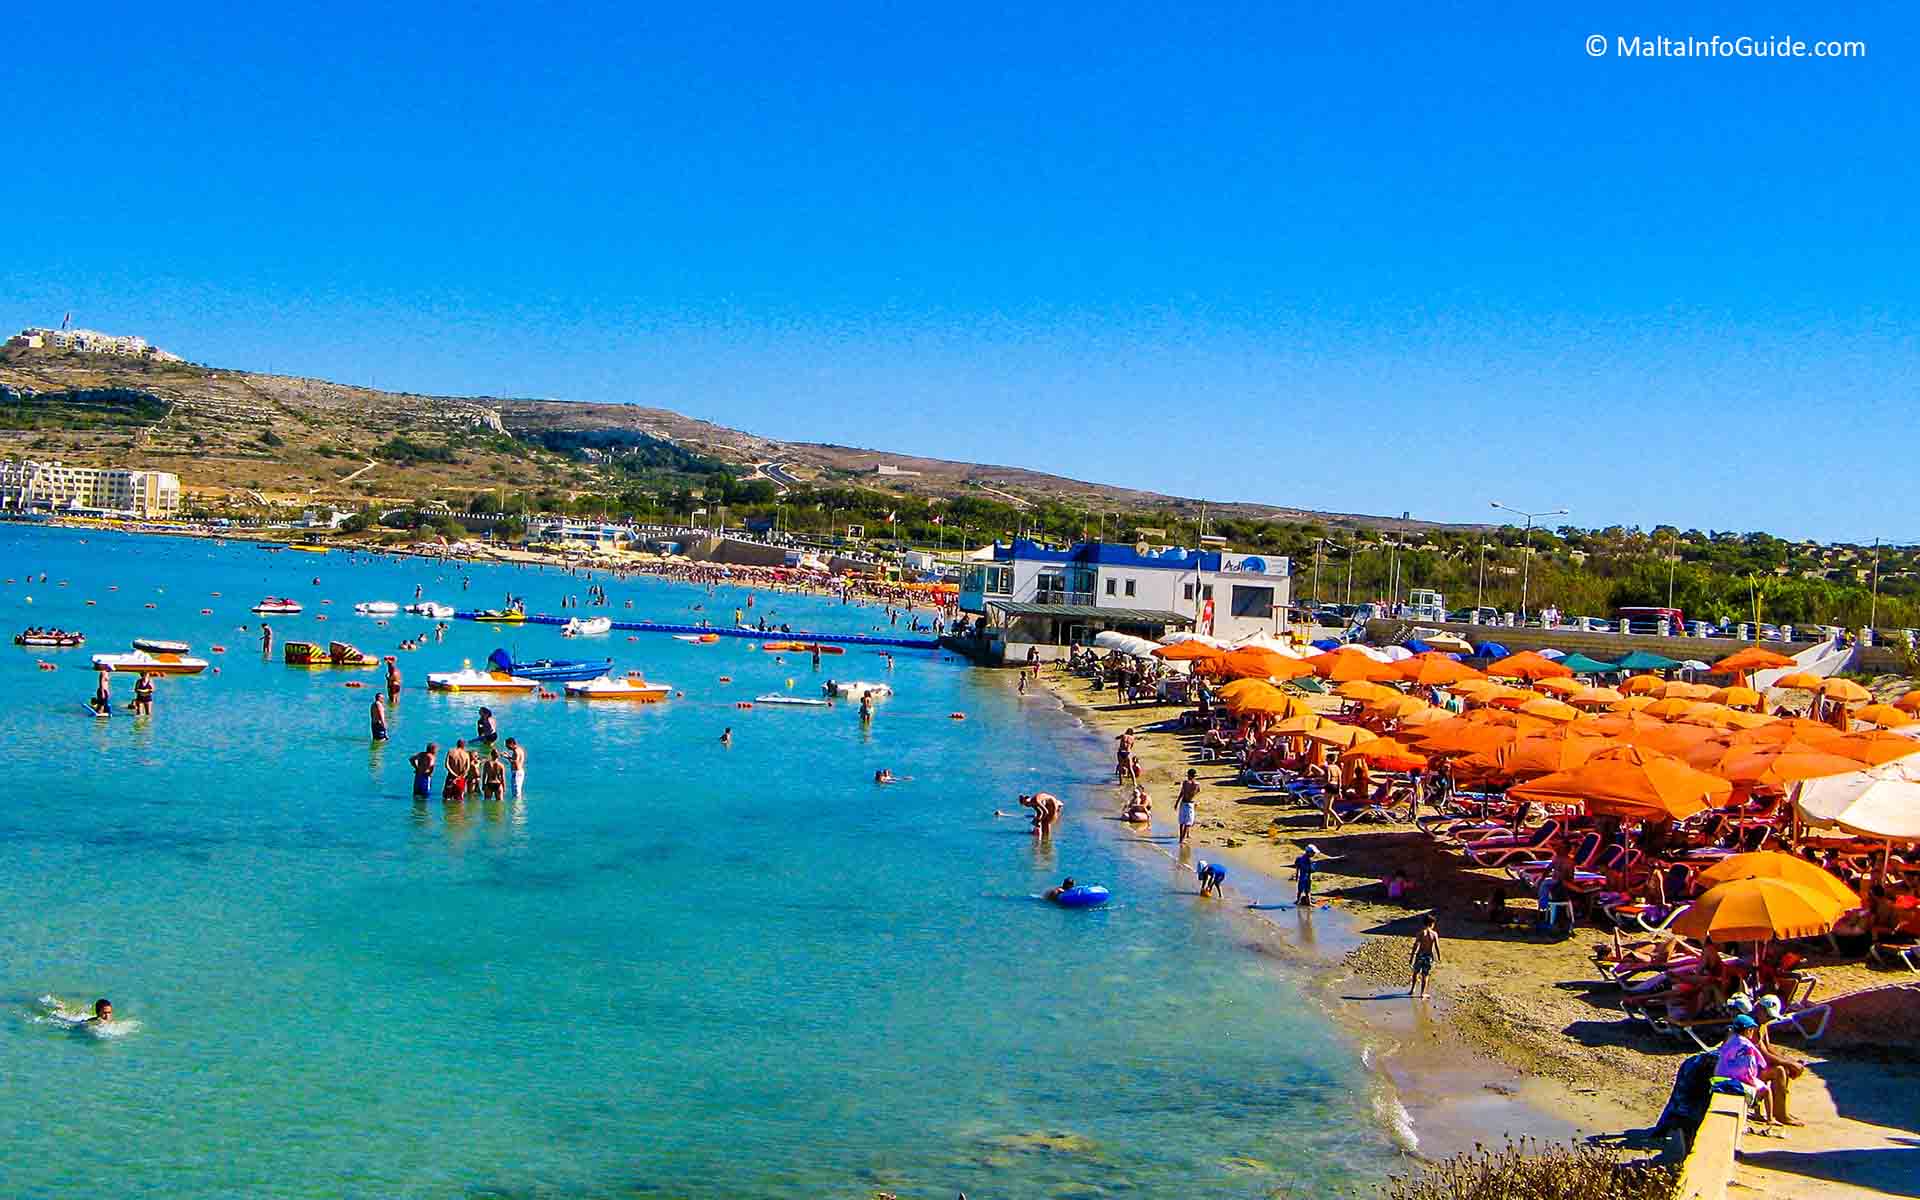 People flock to the beach of Mellieha Bay Malta.